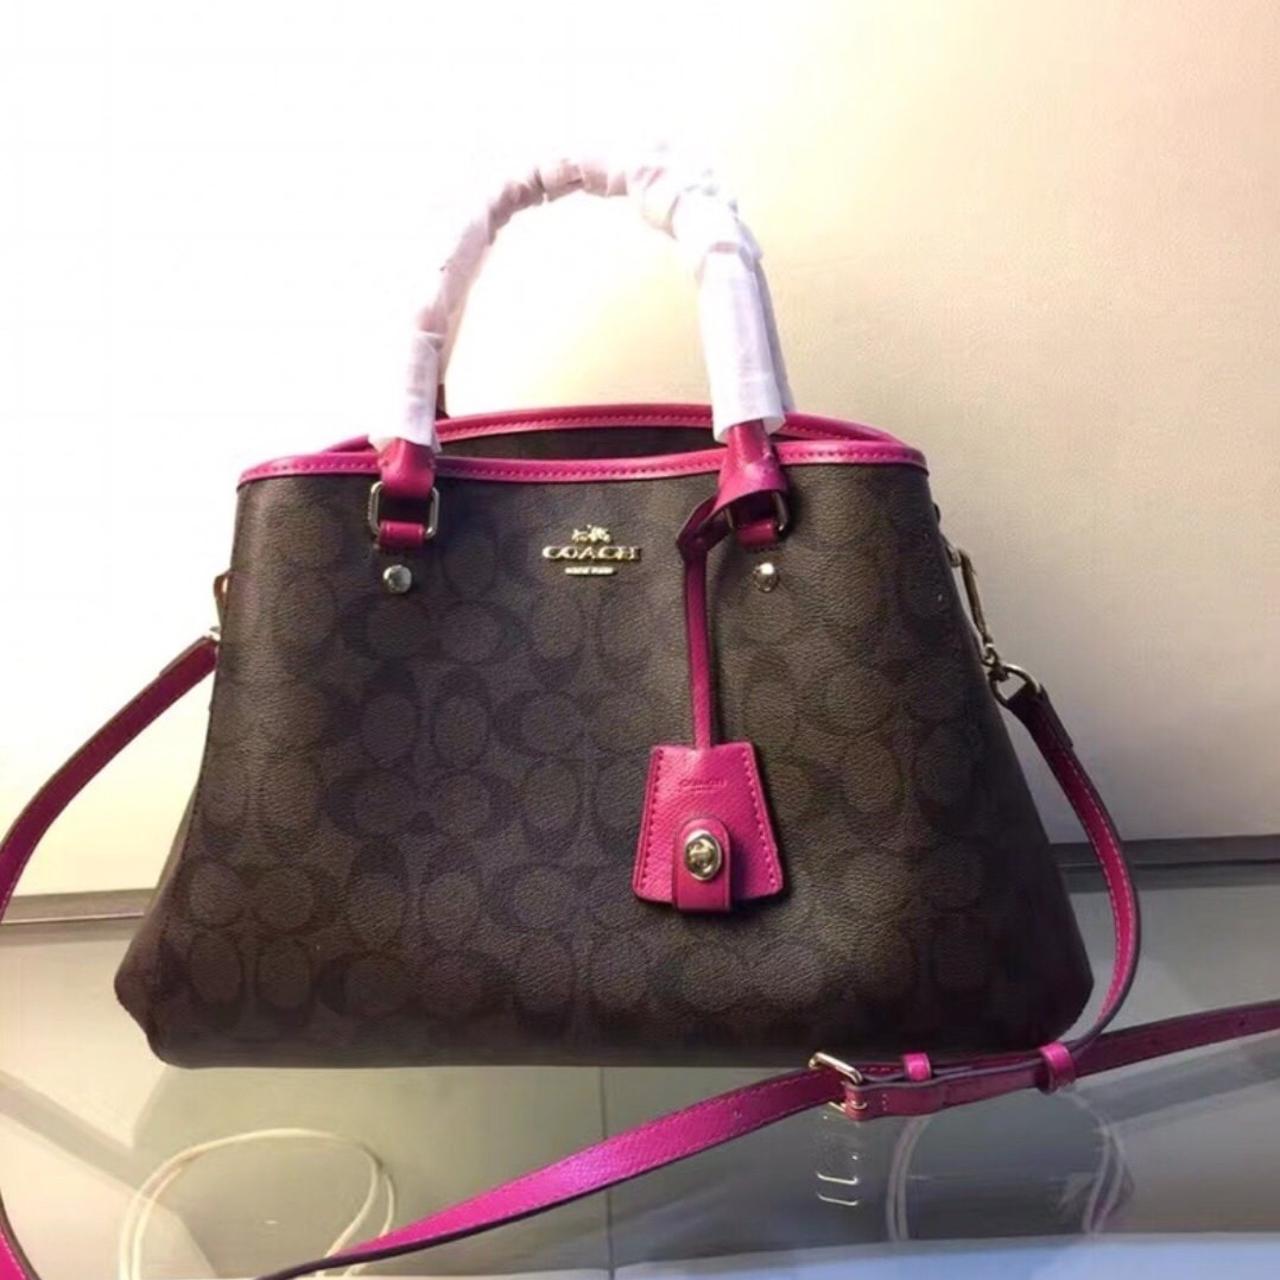 Dark brown coach handbag. Bag has pink strap & pink